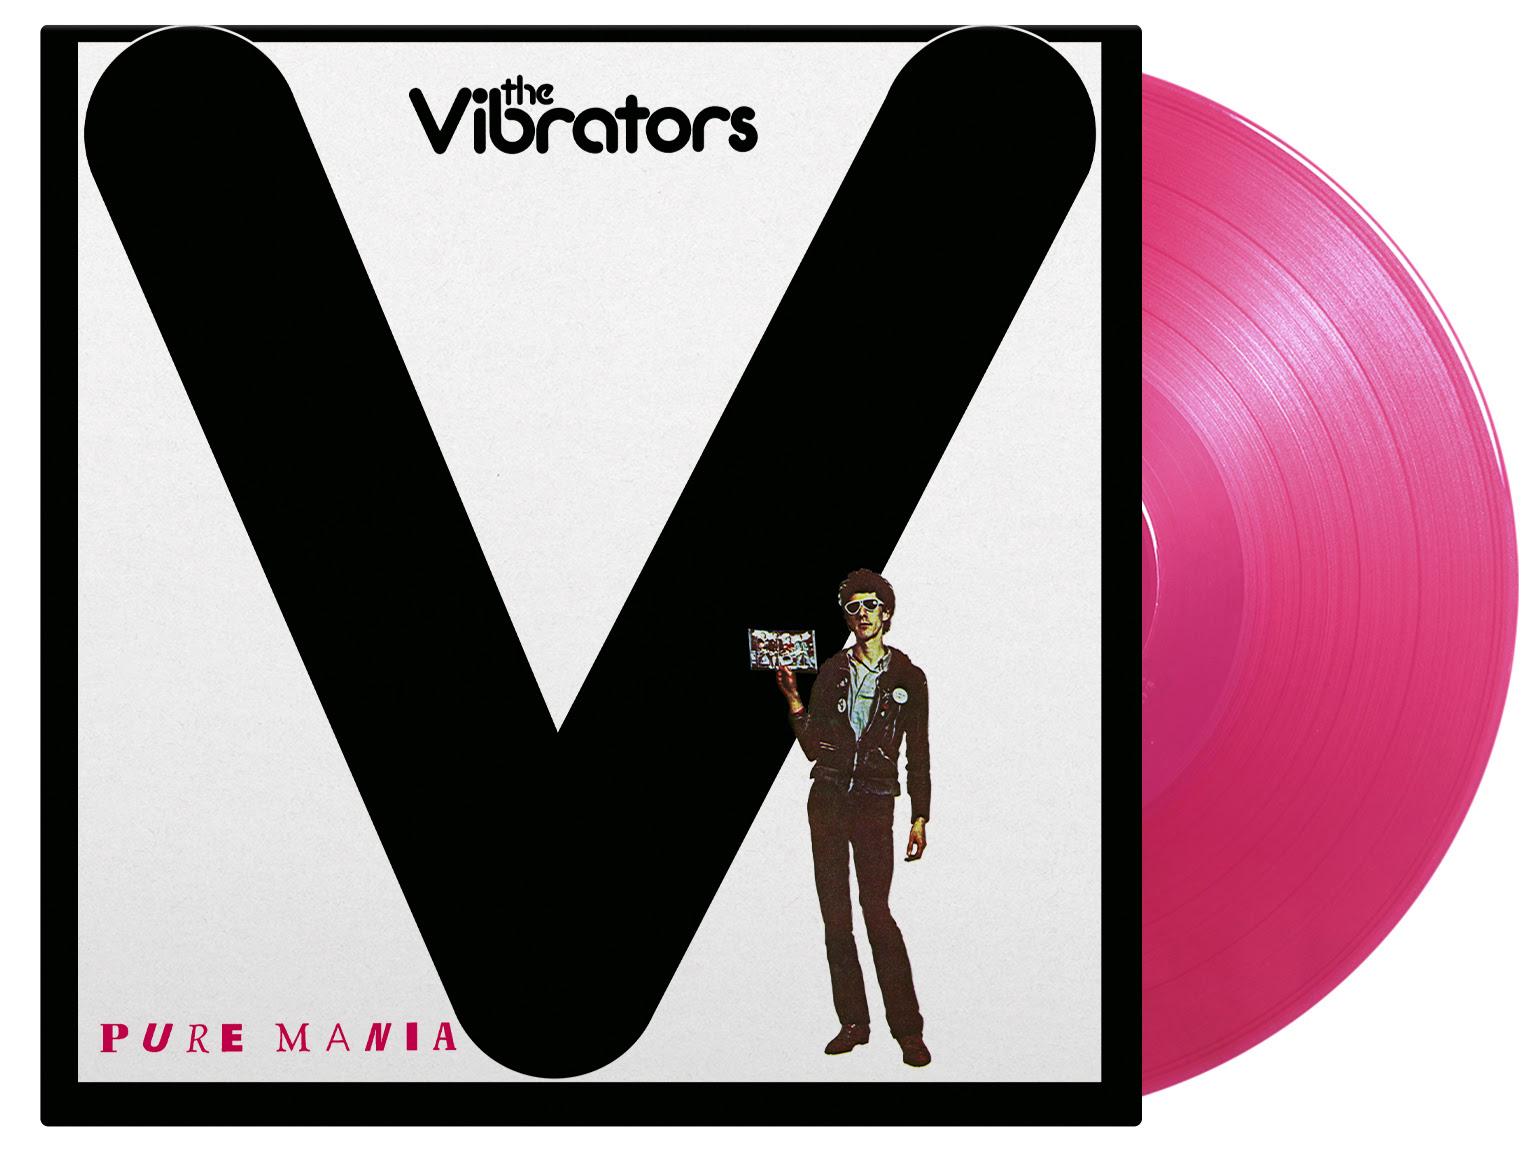 LP - VIBRATORS, THE - PURE MANIA 180g Magenta coloured